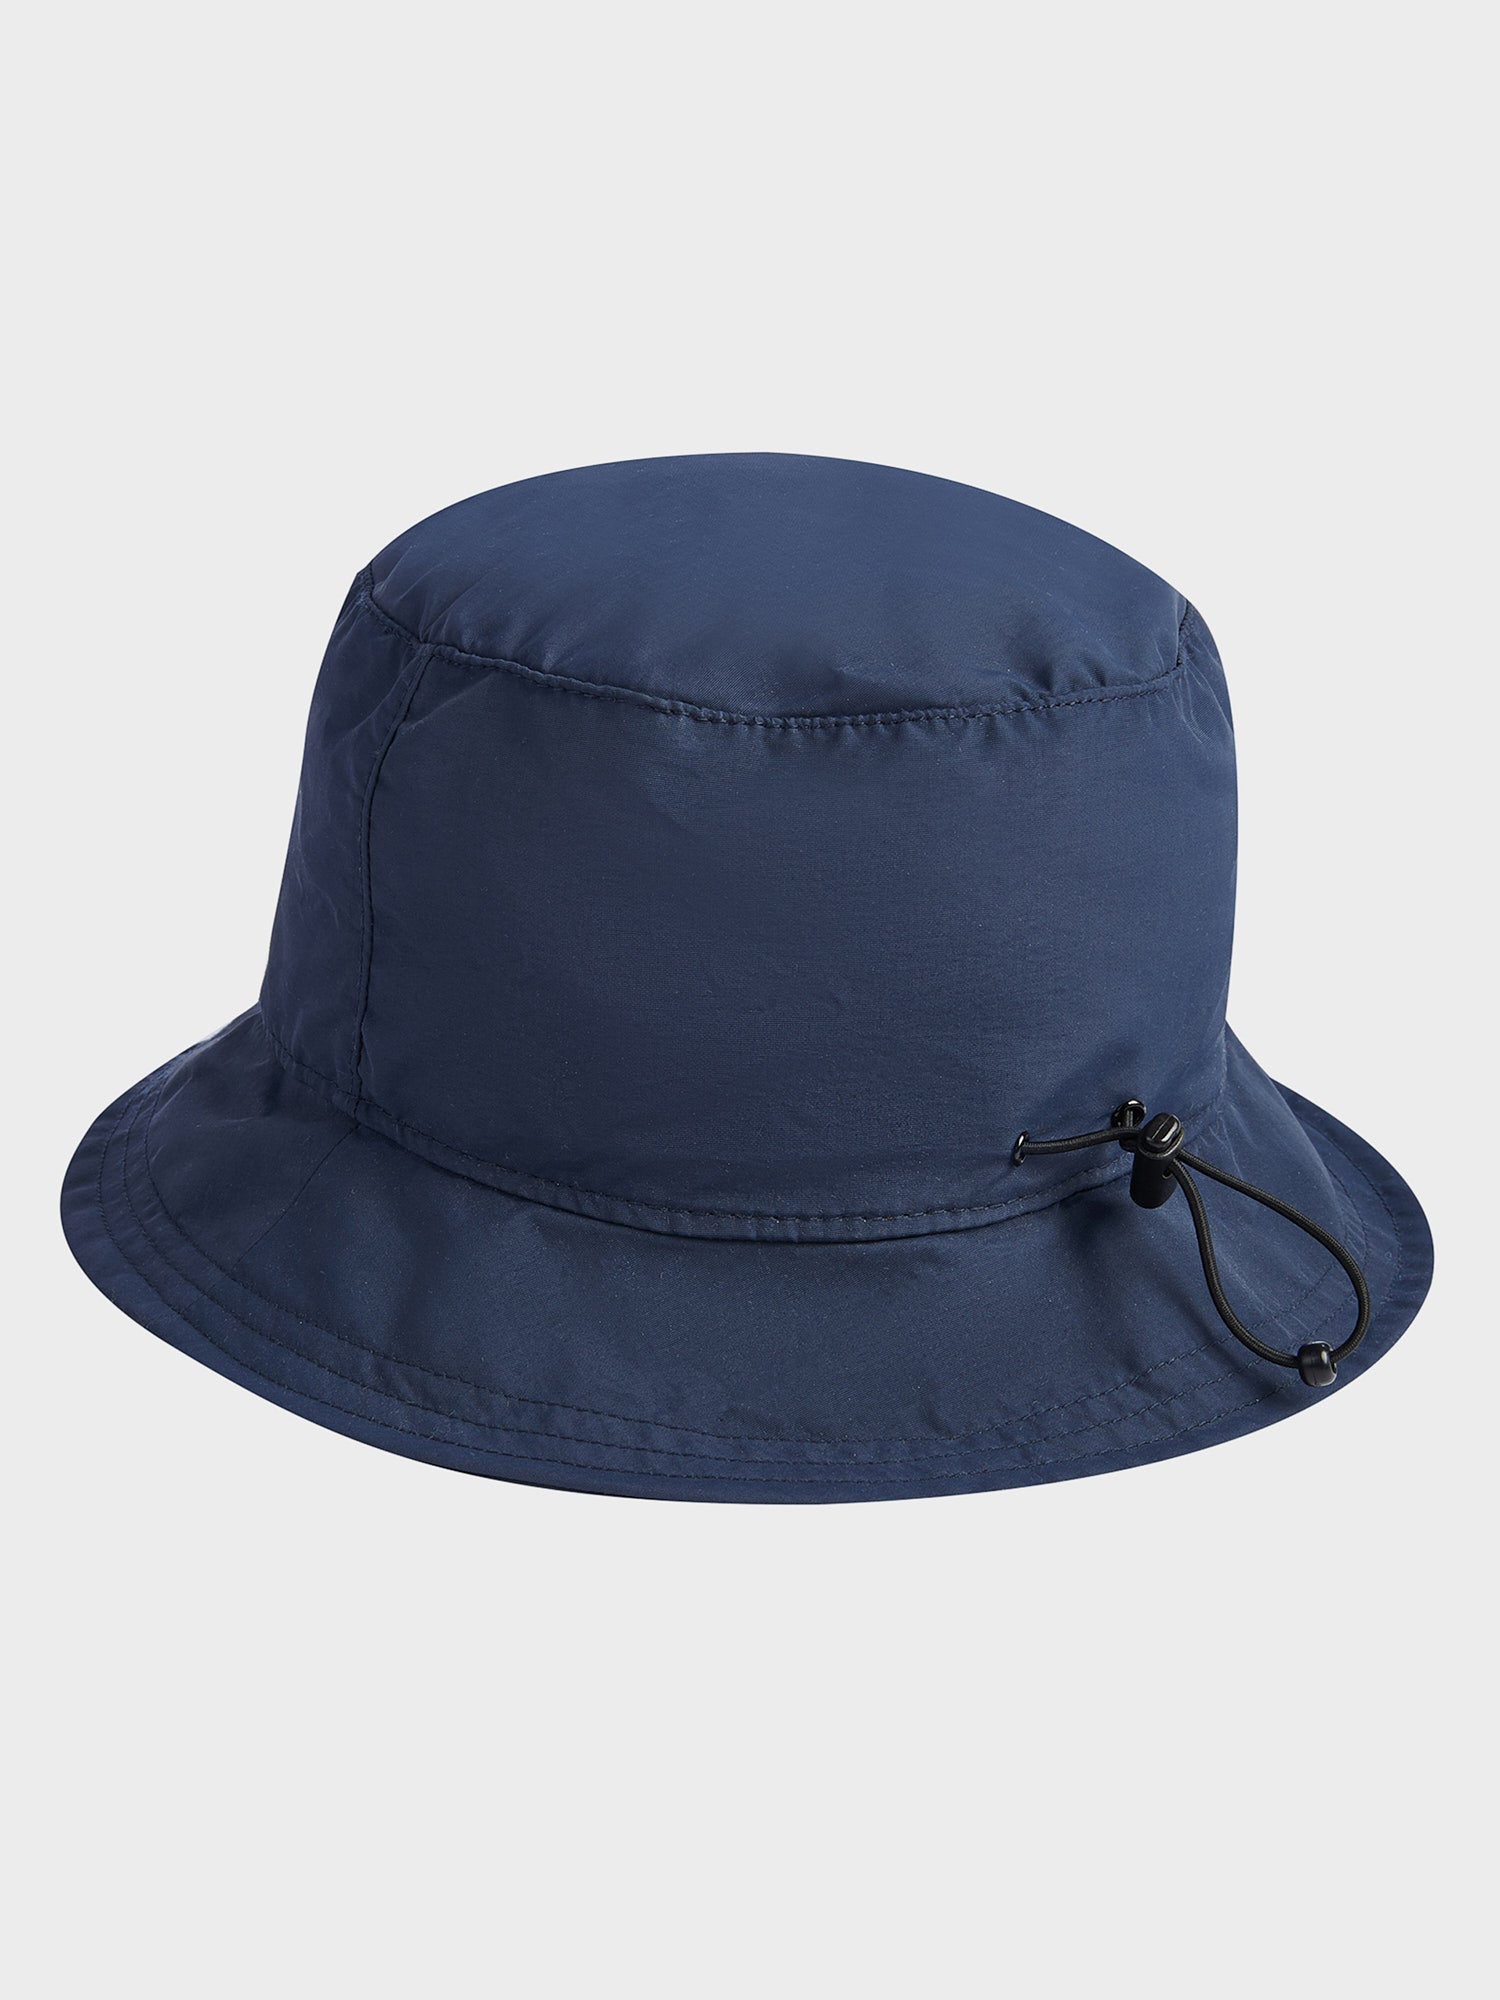 Nylon Bucket Hat in Navy Blue